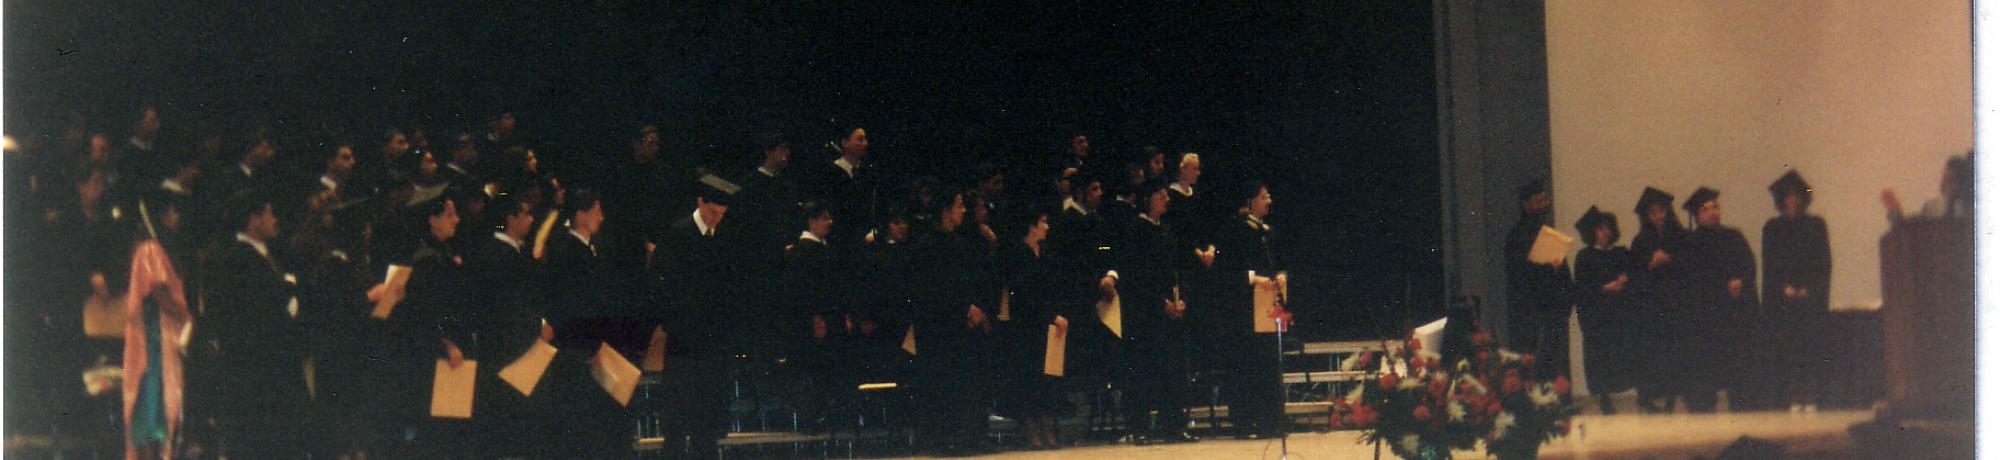 Chicano Latino graduation ceremony from 1991